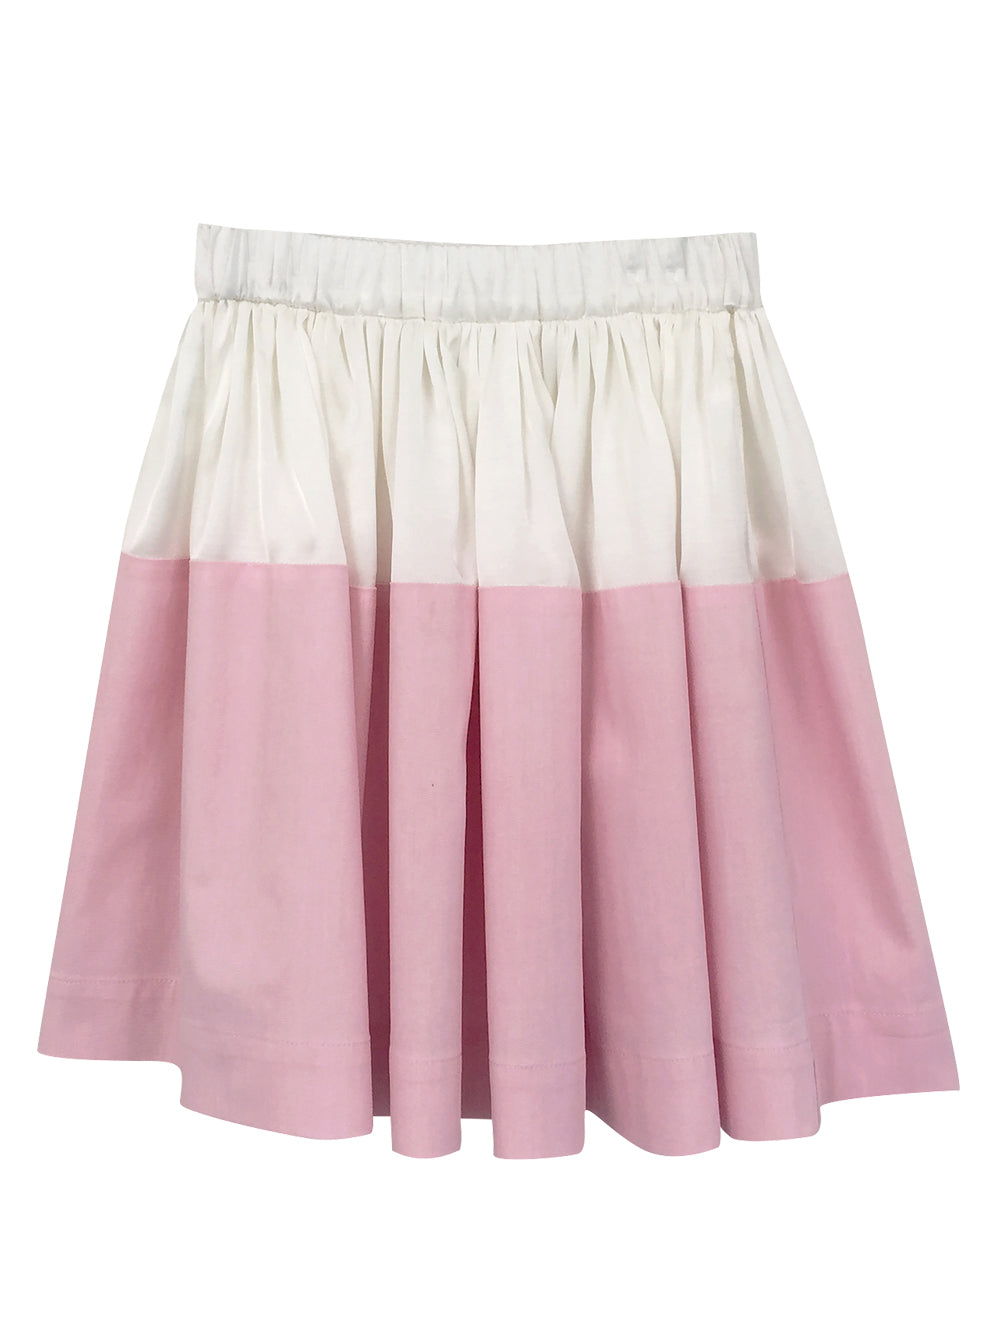 PREORDER: Tilda Blossom Skirt